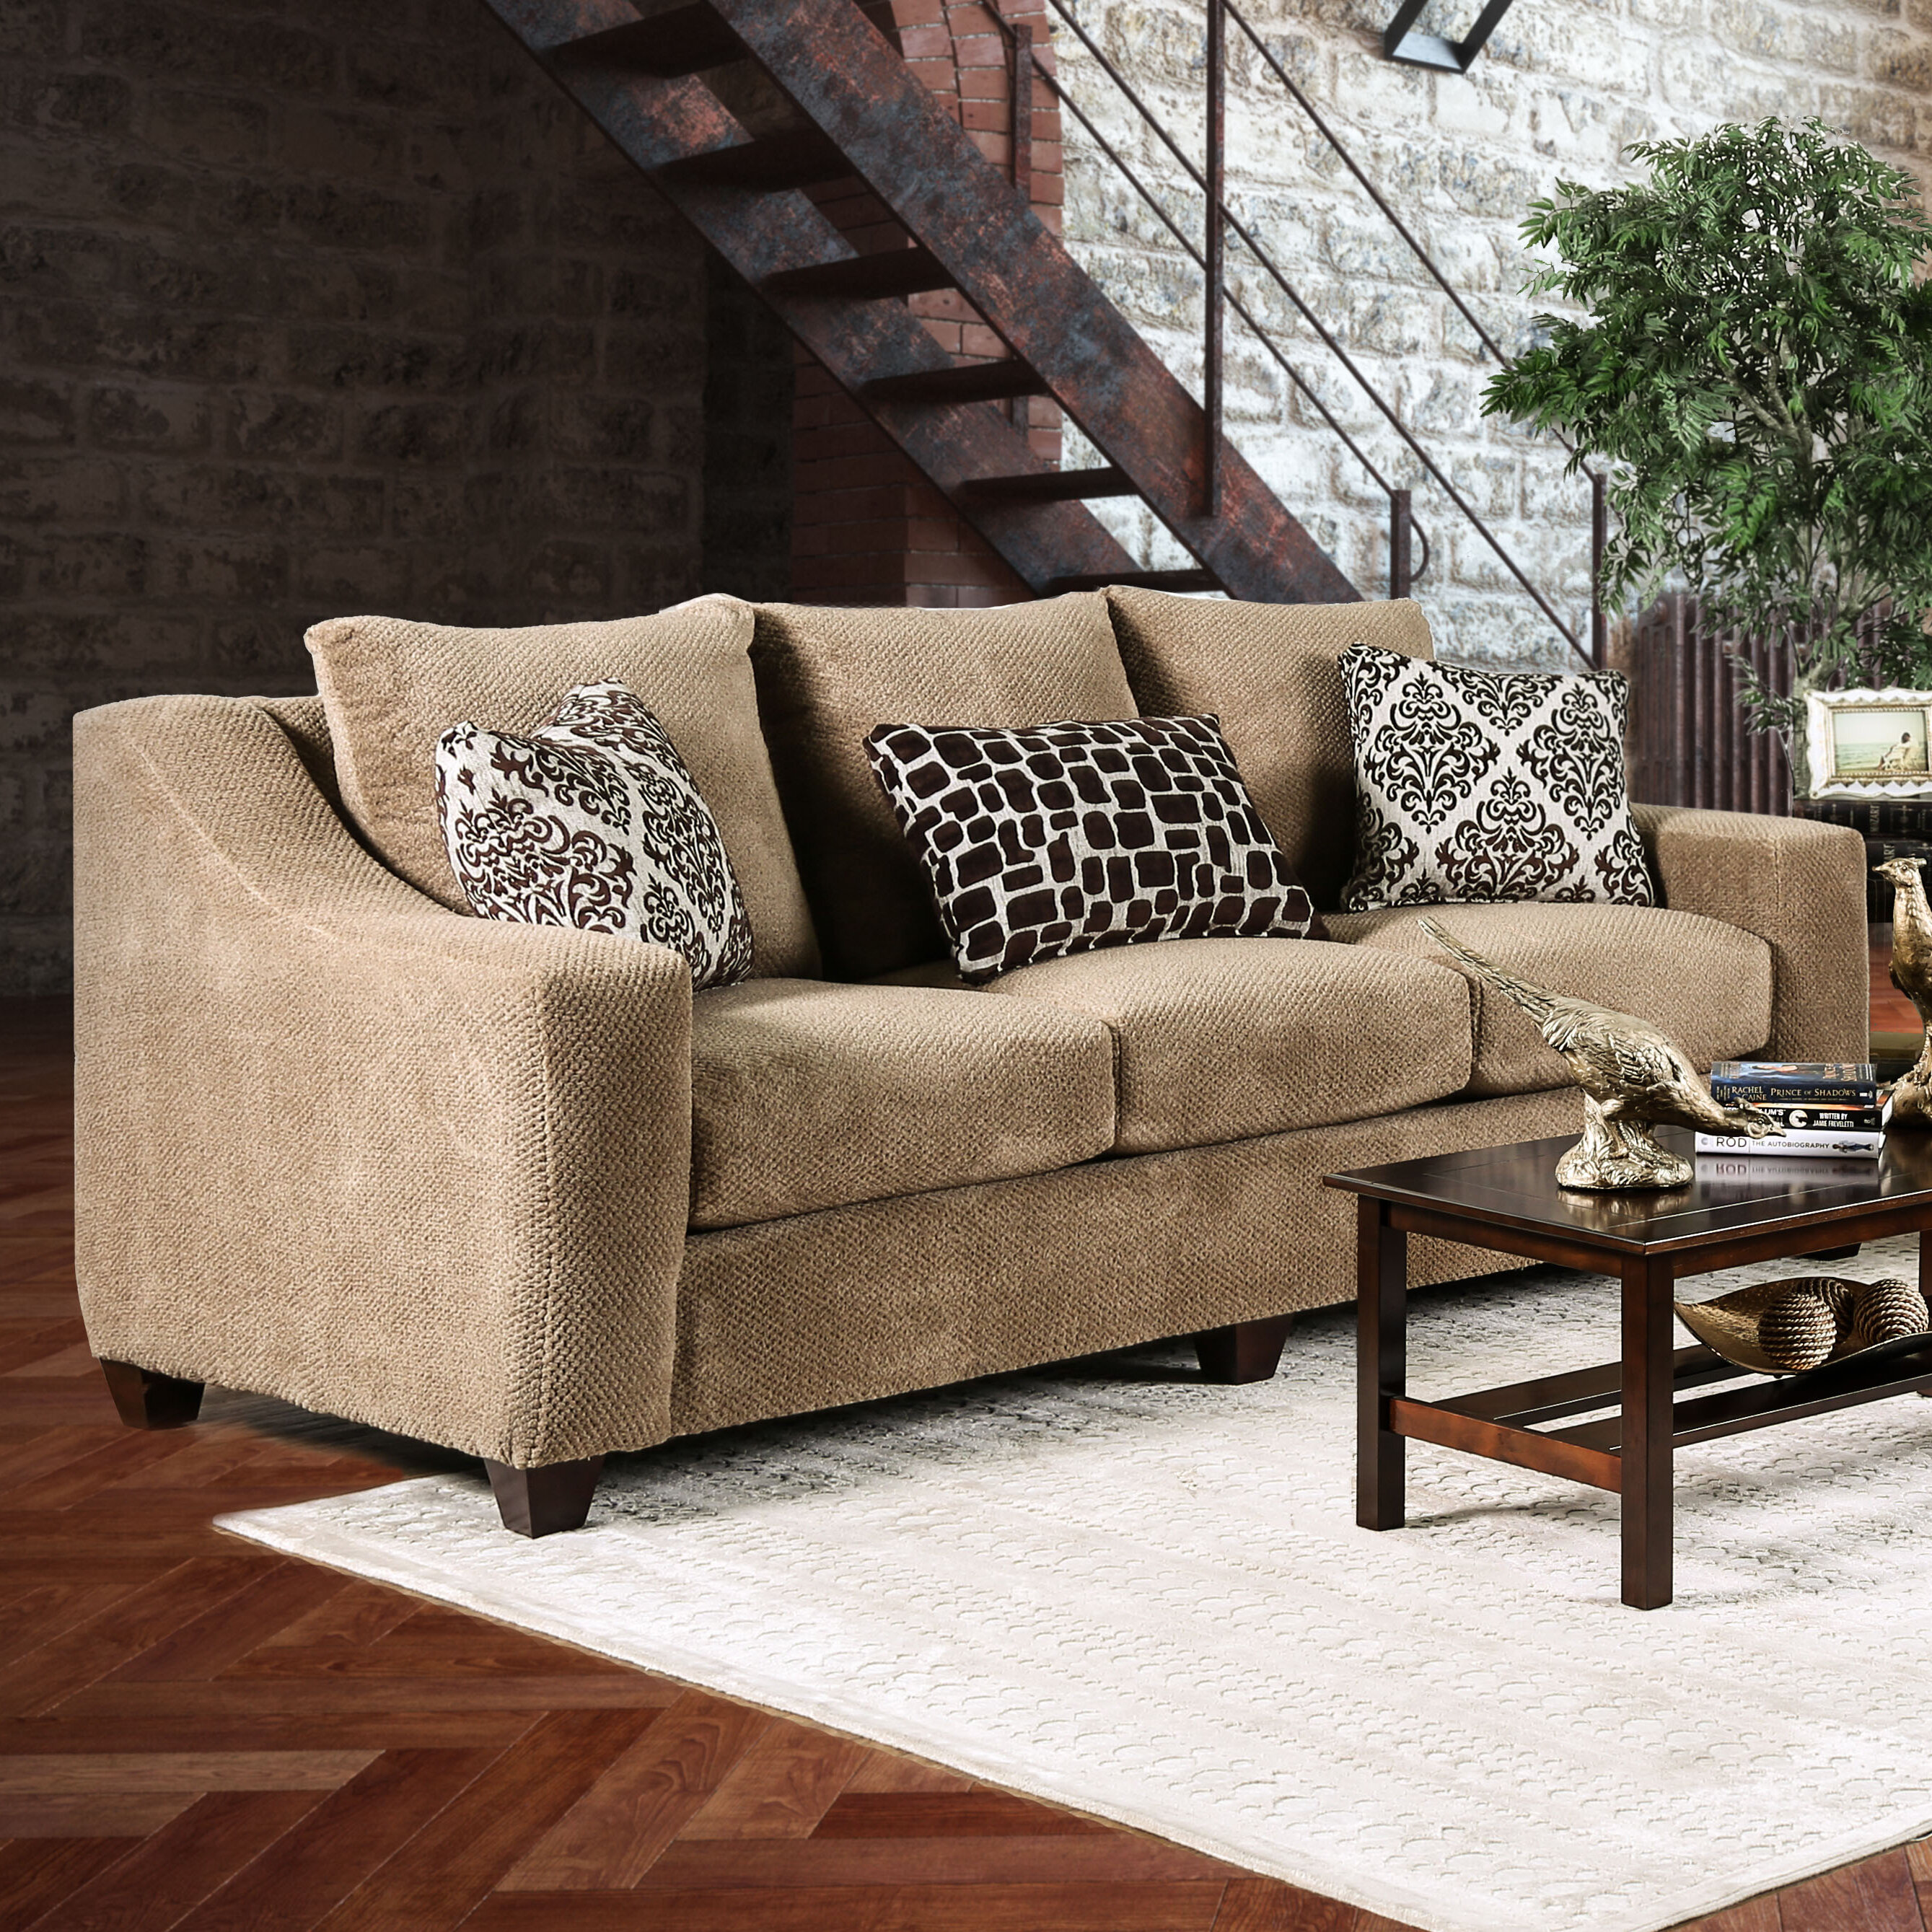 MODERN MICROFIBER SECTIONAL SOFA SET IN CHOCOLATE COLOR – VIVI Furniture